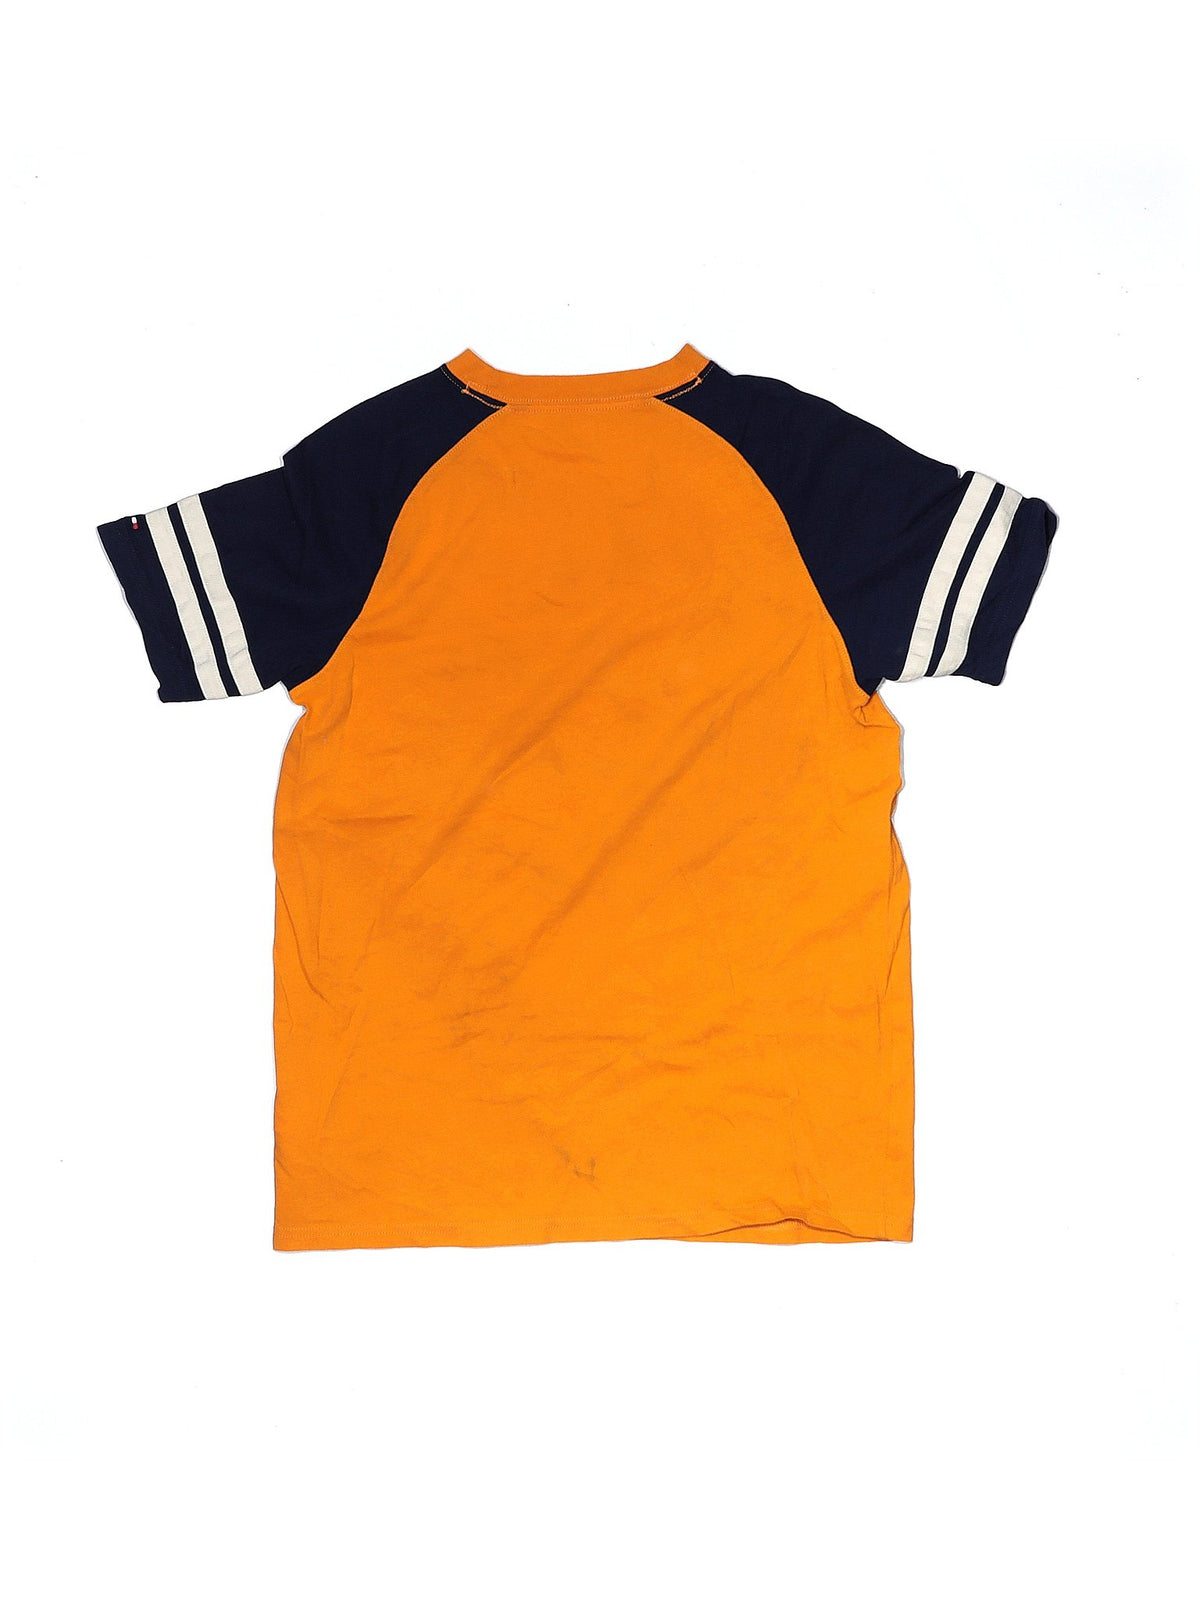 Short Sleeve T Shirt size - 16